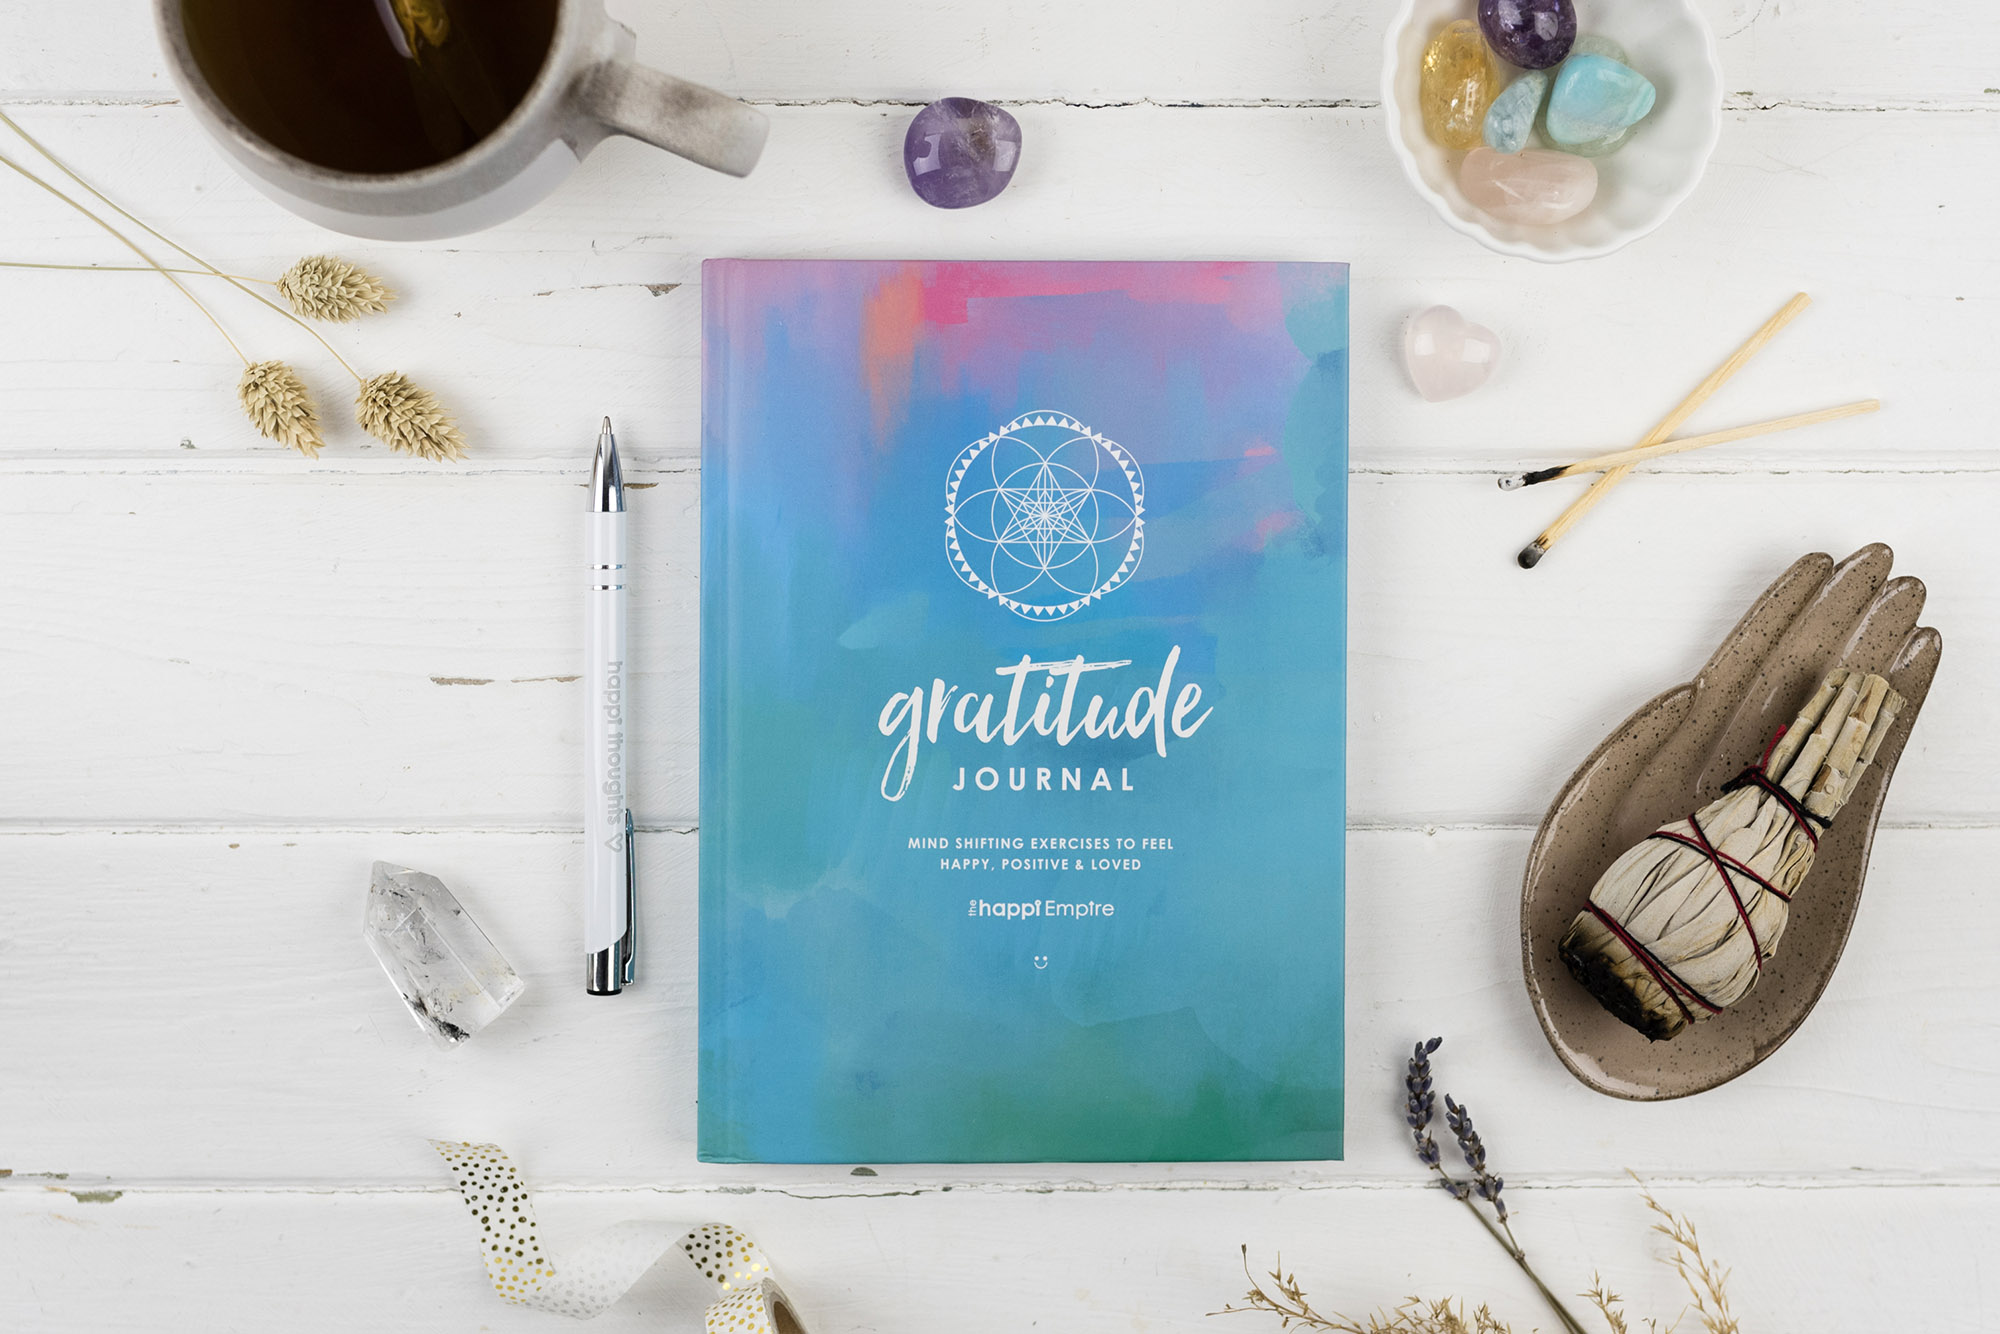 Gratitude Journal front cover